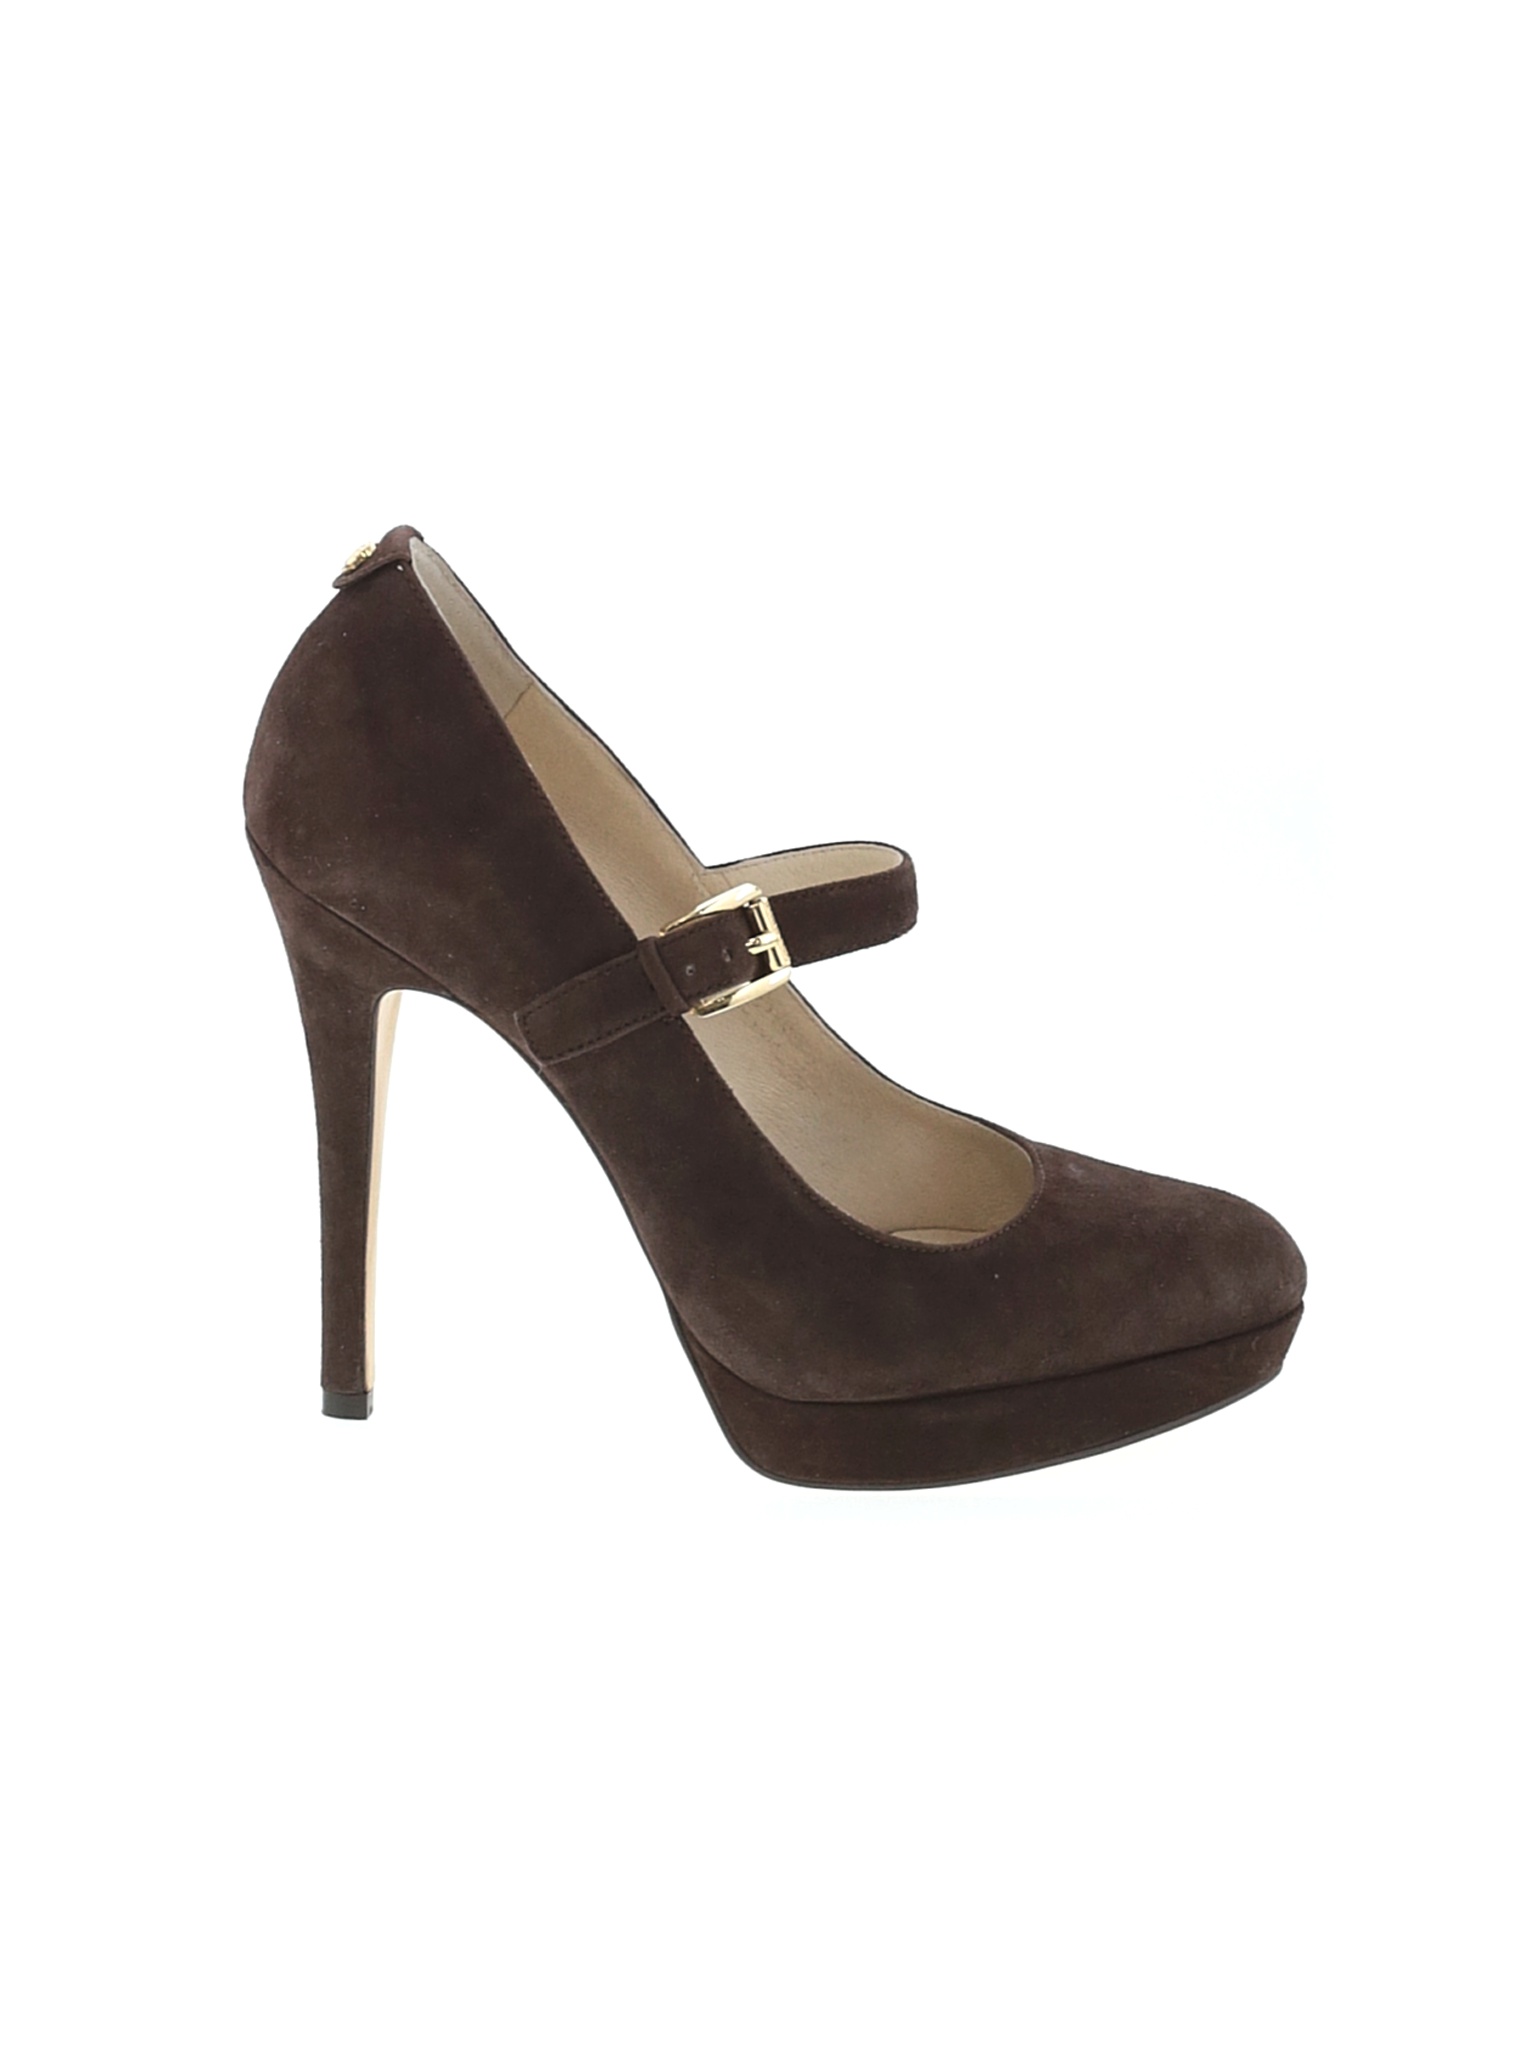 MICHAEL Michael Kors Women Brown Heels US 8 | eBay